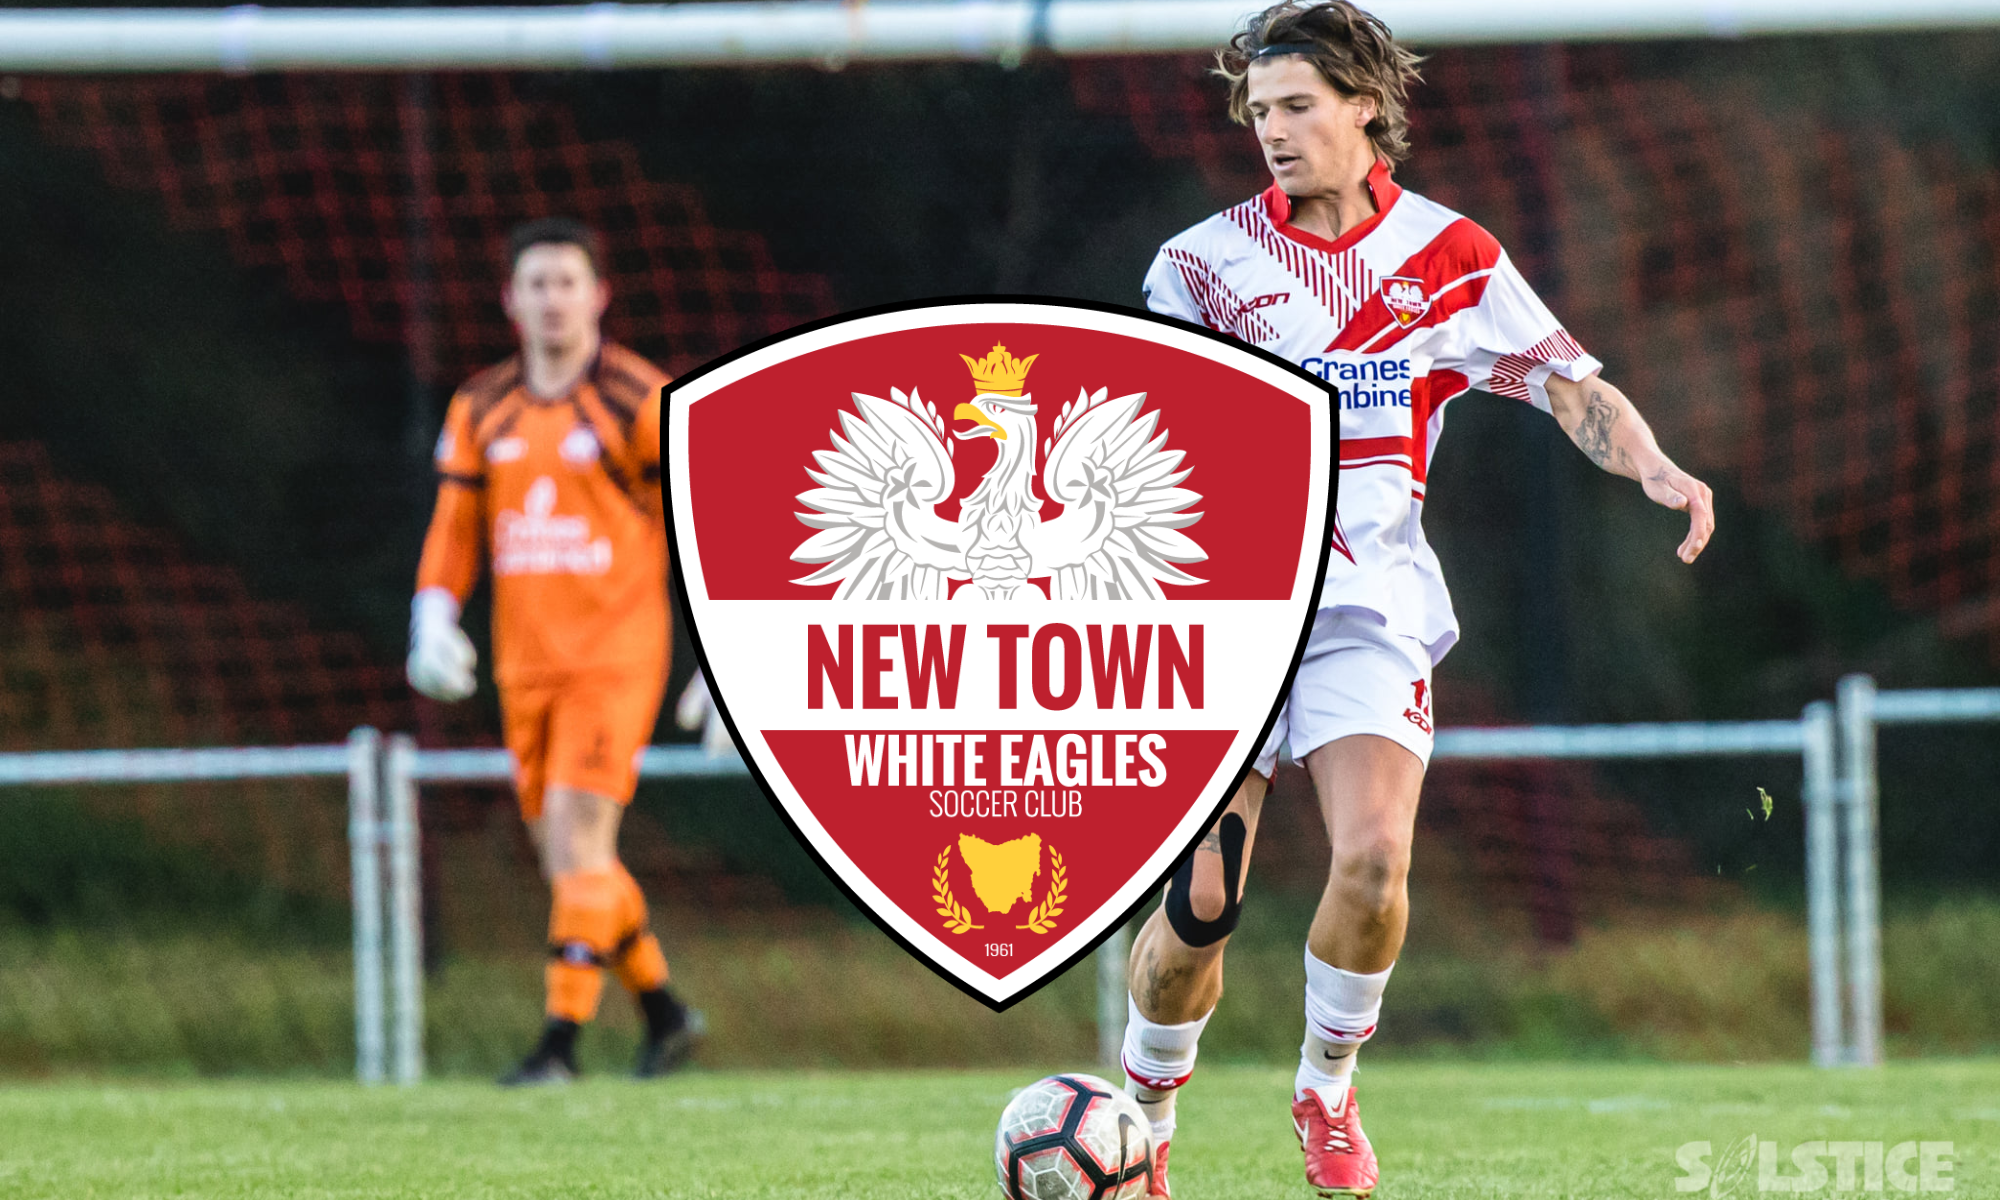 New Town White Eagles S.C